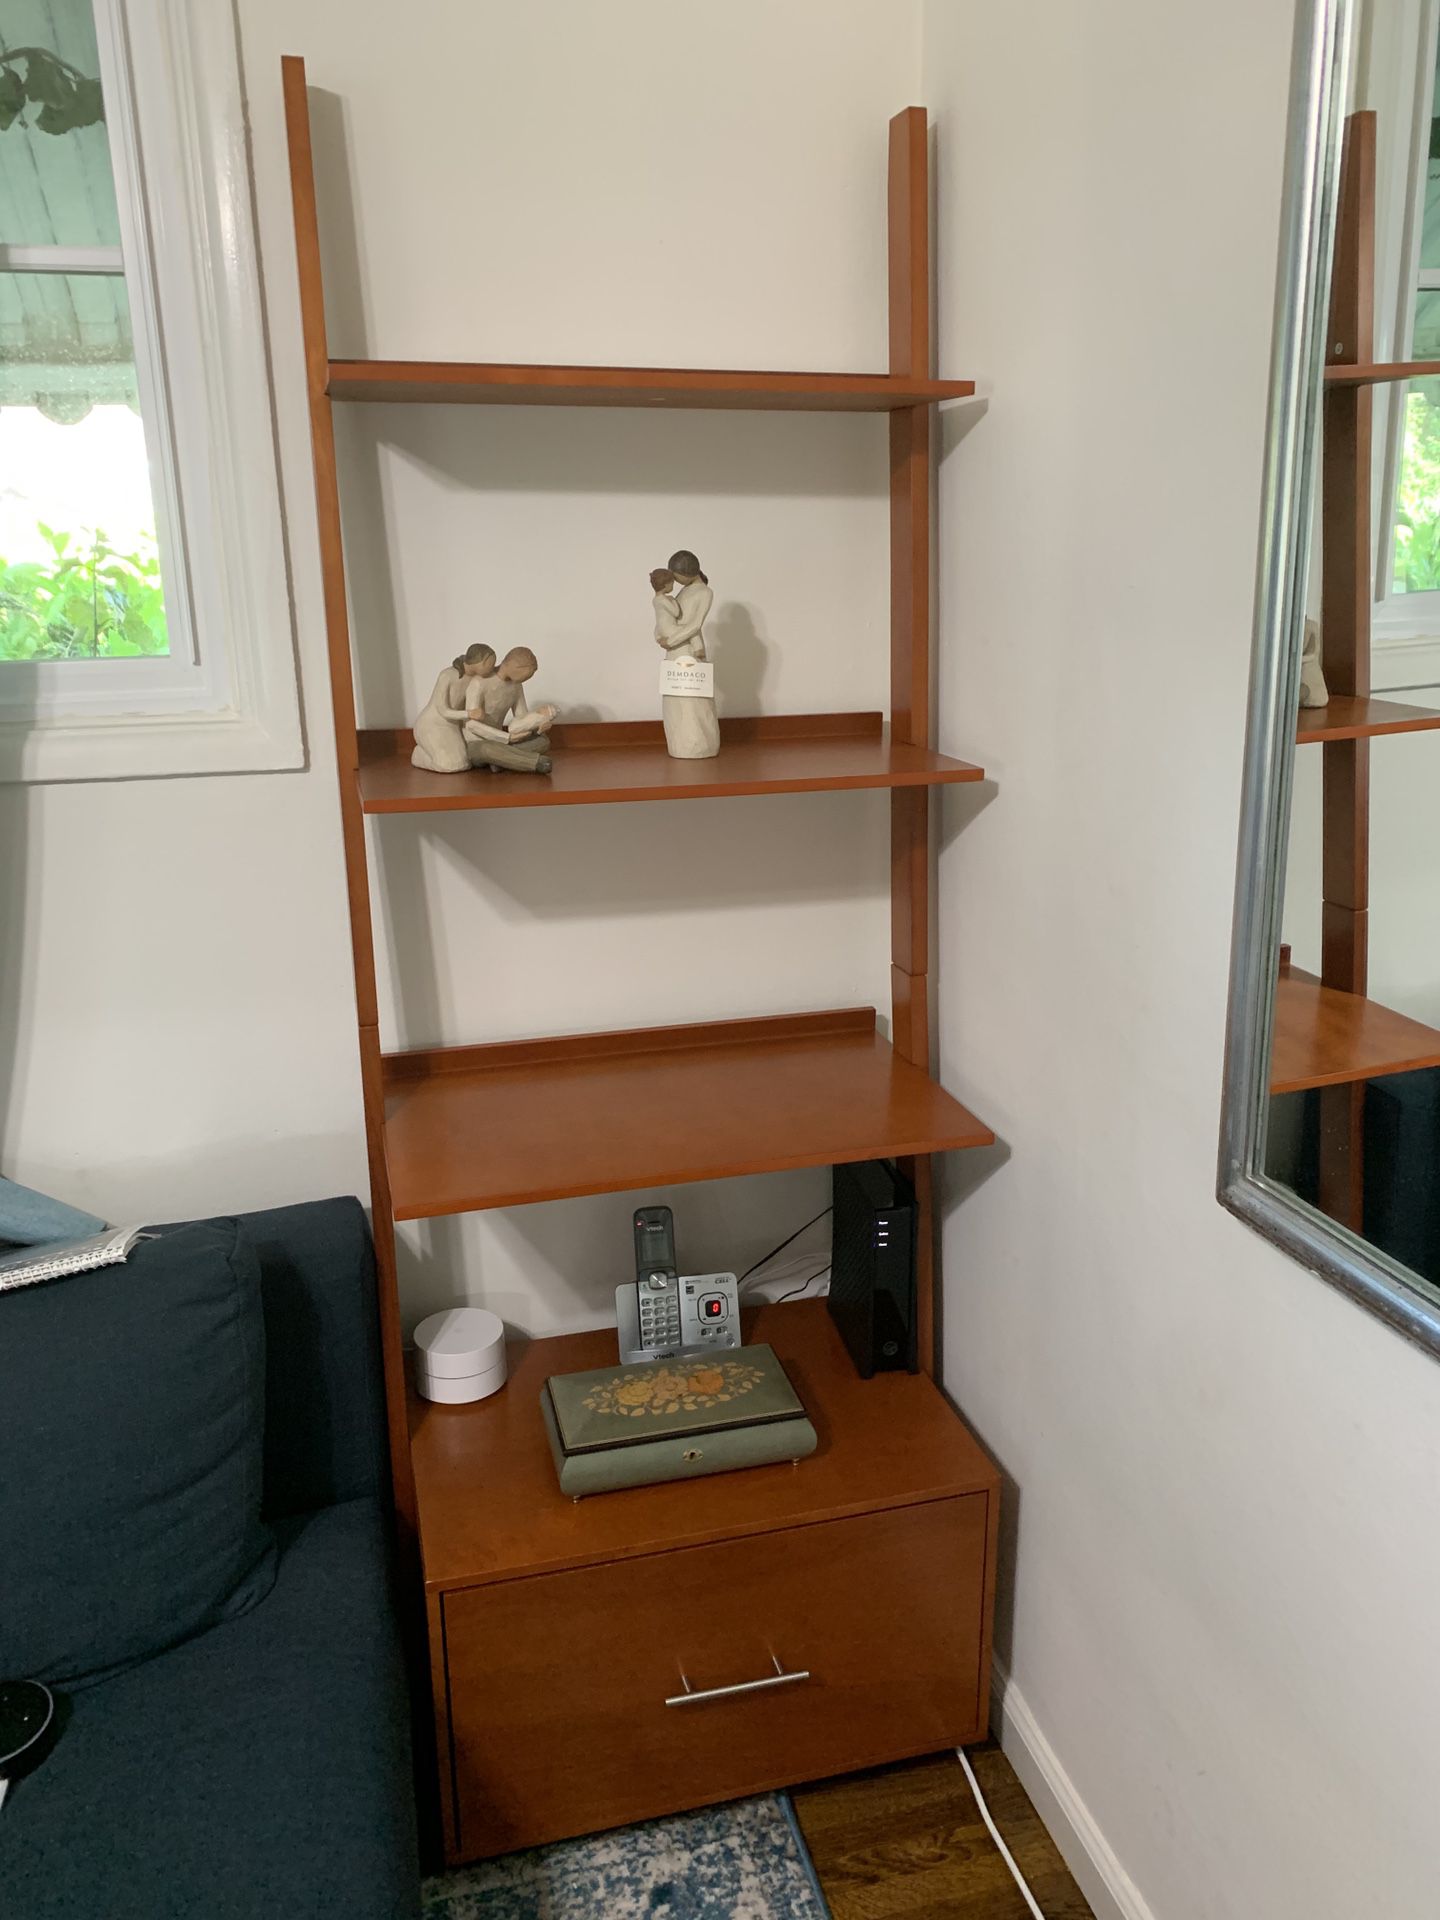 Brand new ladder shelf